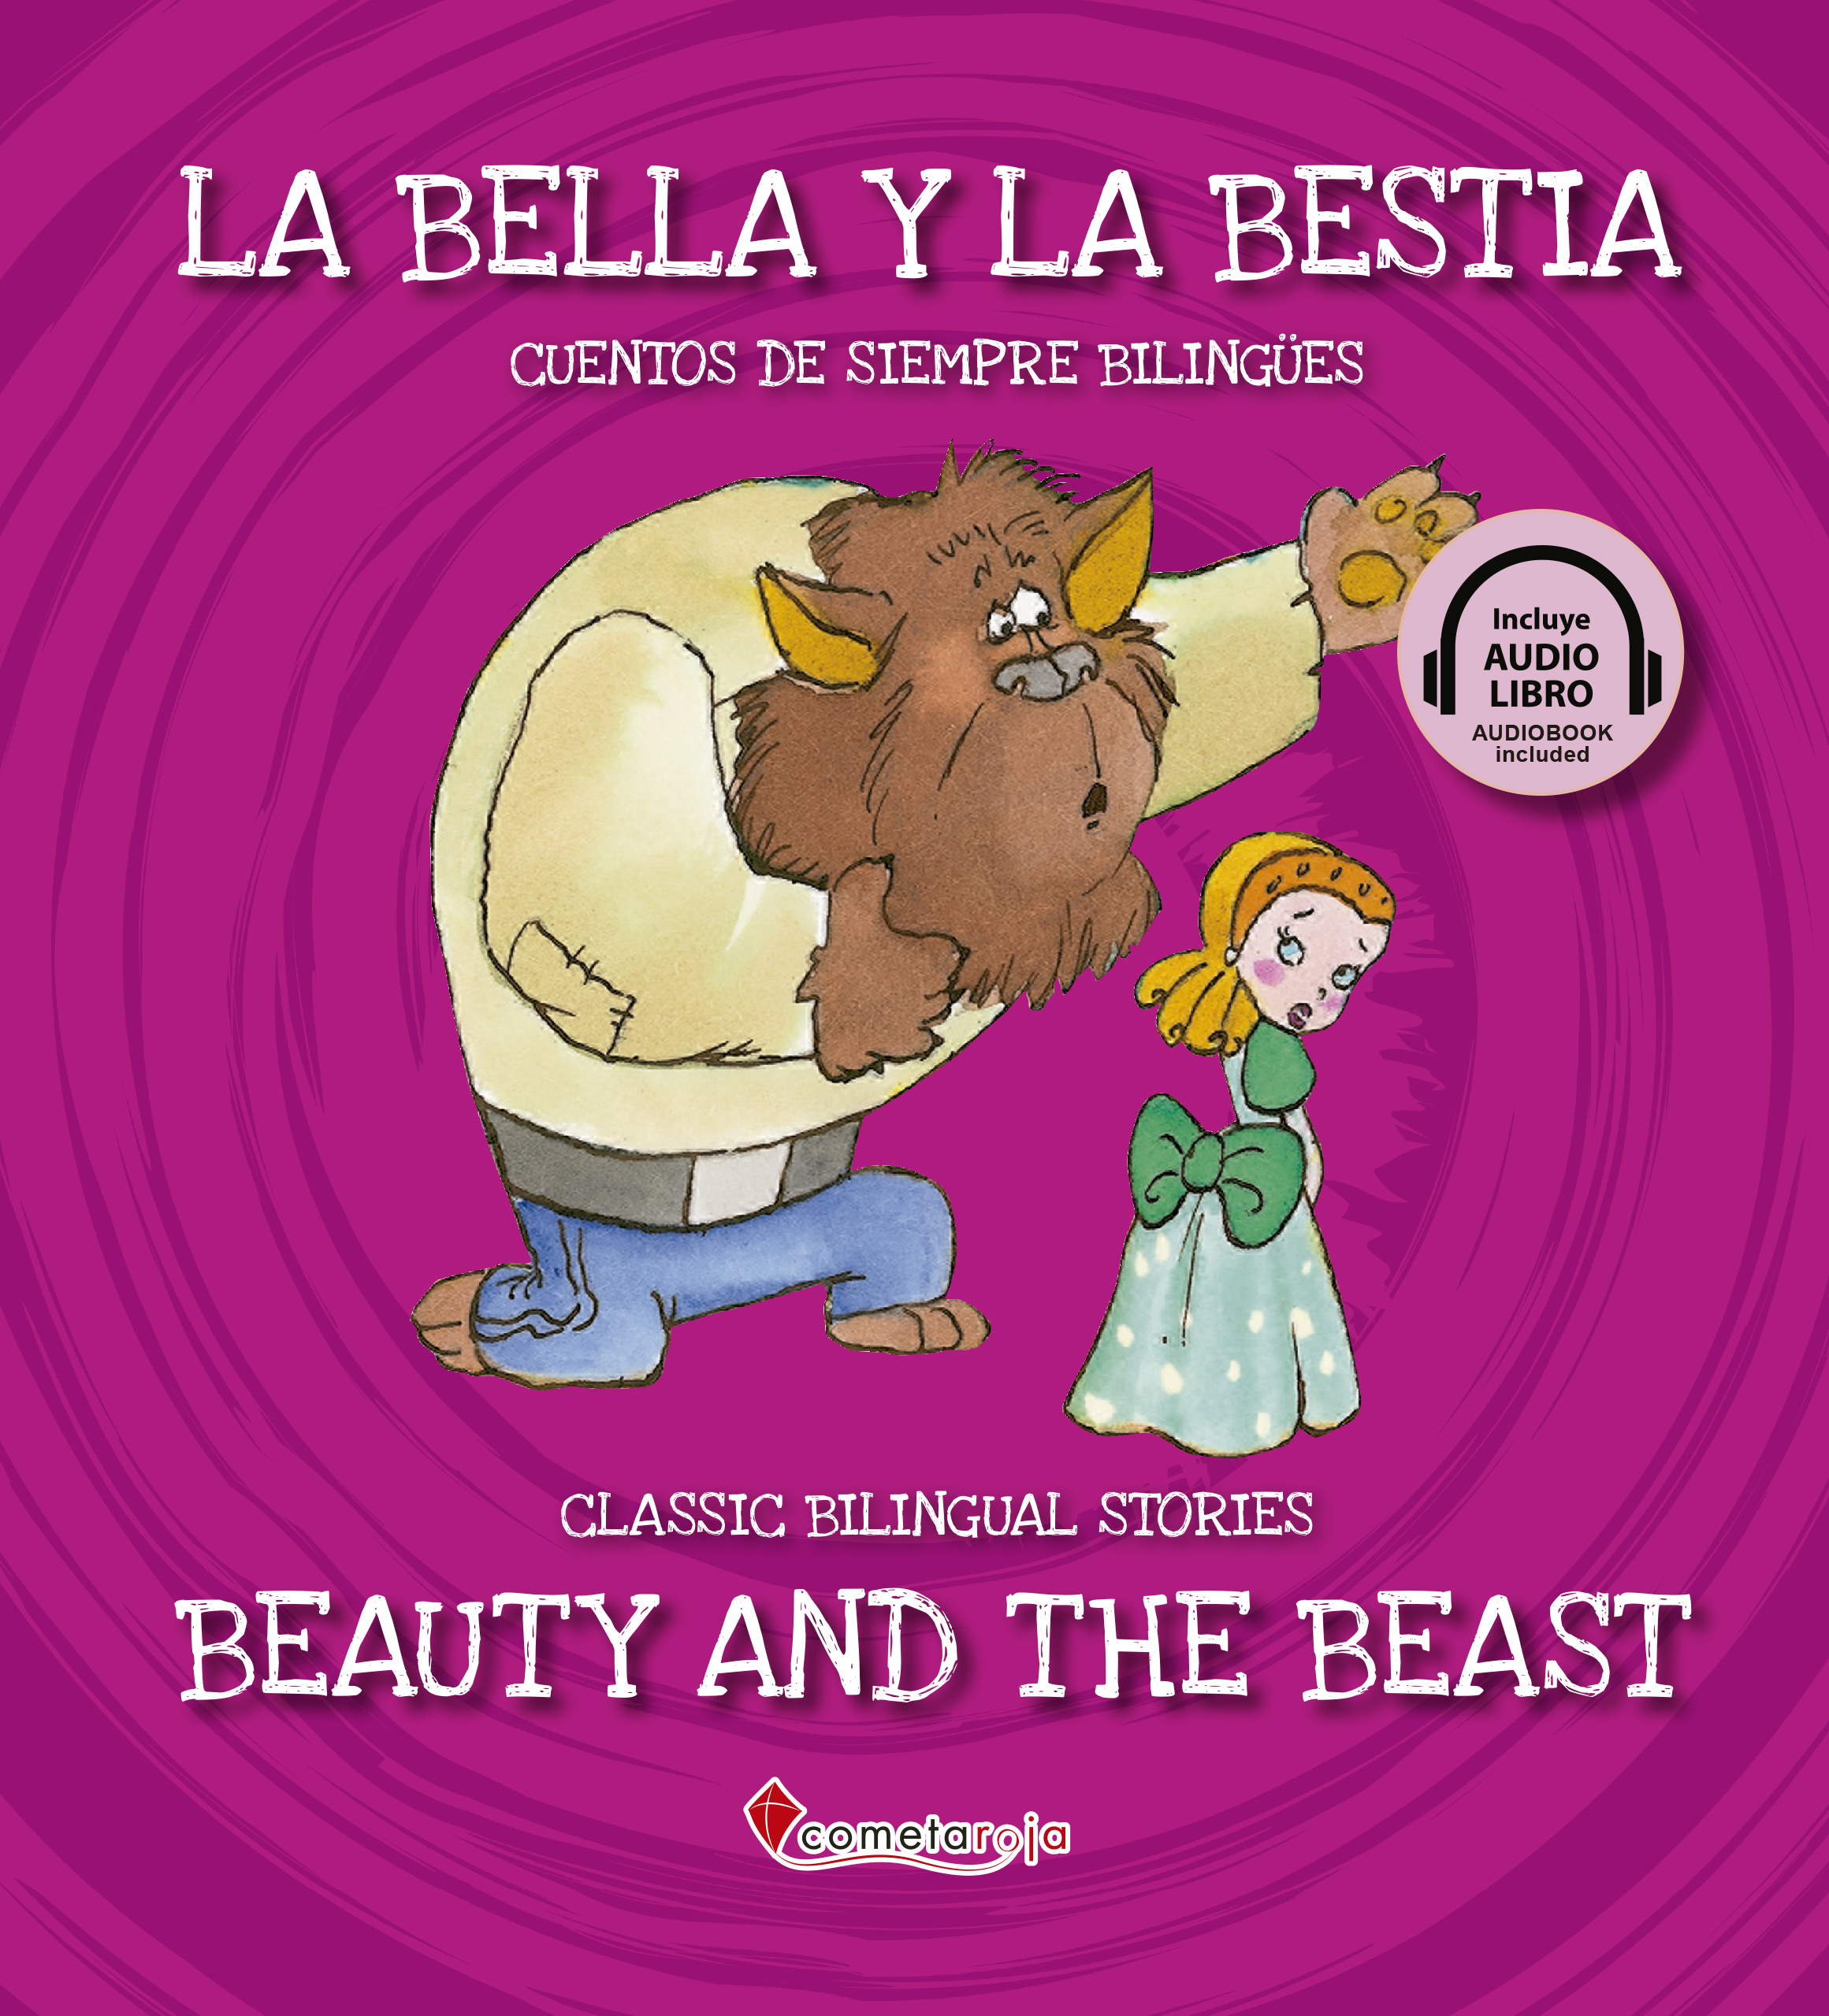 La bella y la bestia / Beauty and the beast